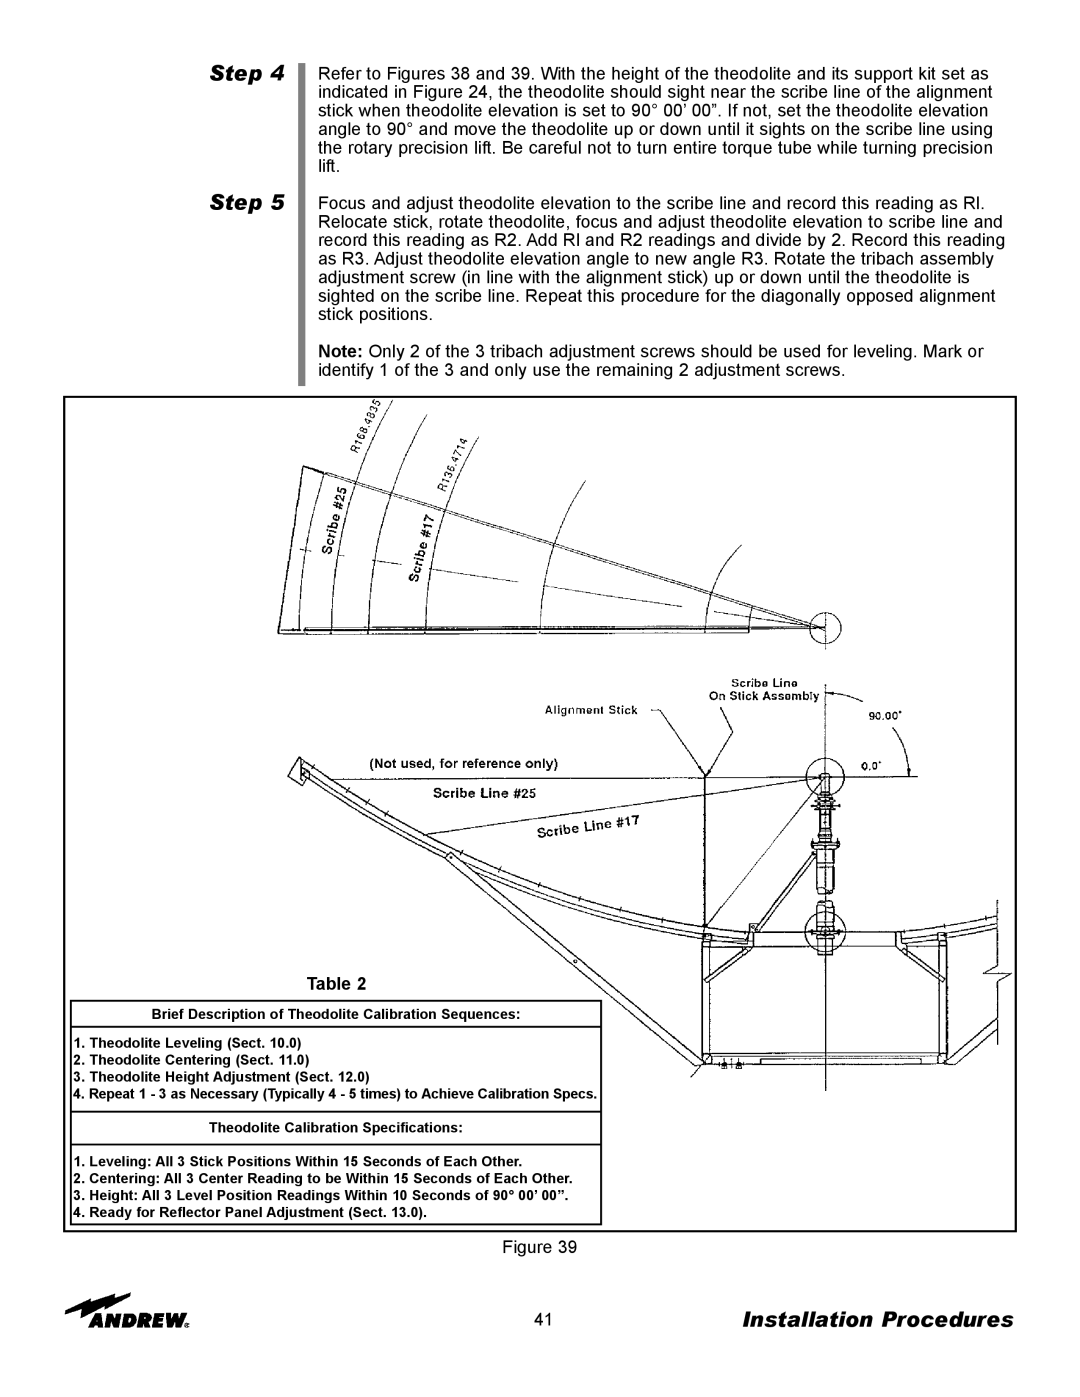 Andrew 9.3-Meter ESA manual Step Step, Installation Procedures 